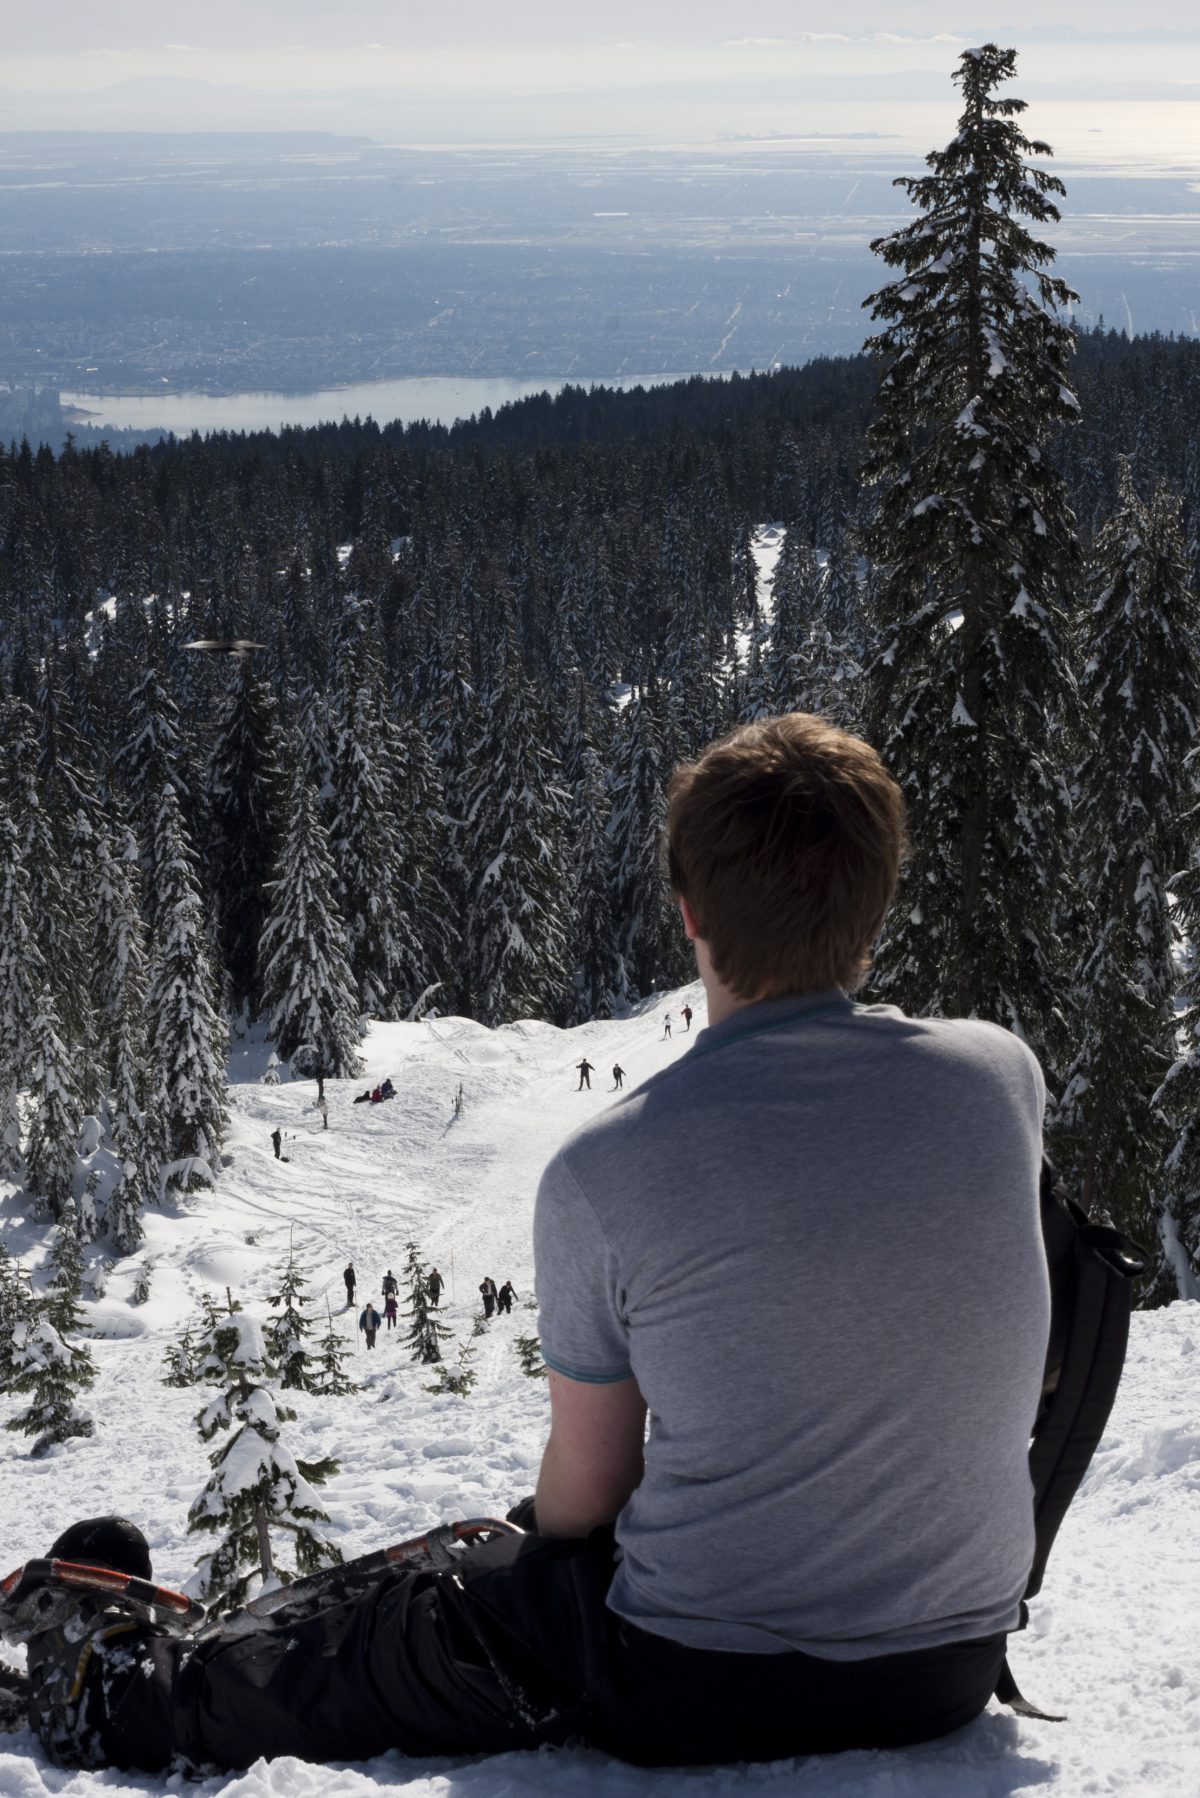 Richard enjoying the view - Snowshoeing at Cypress mountain, snow, mountain, male